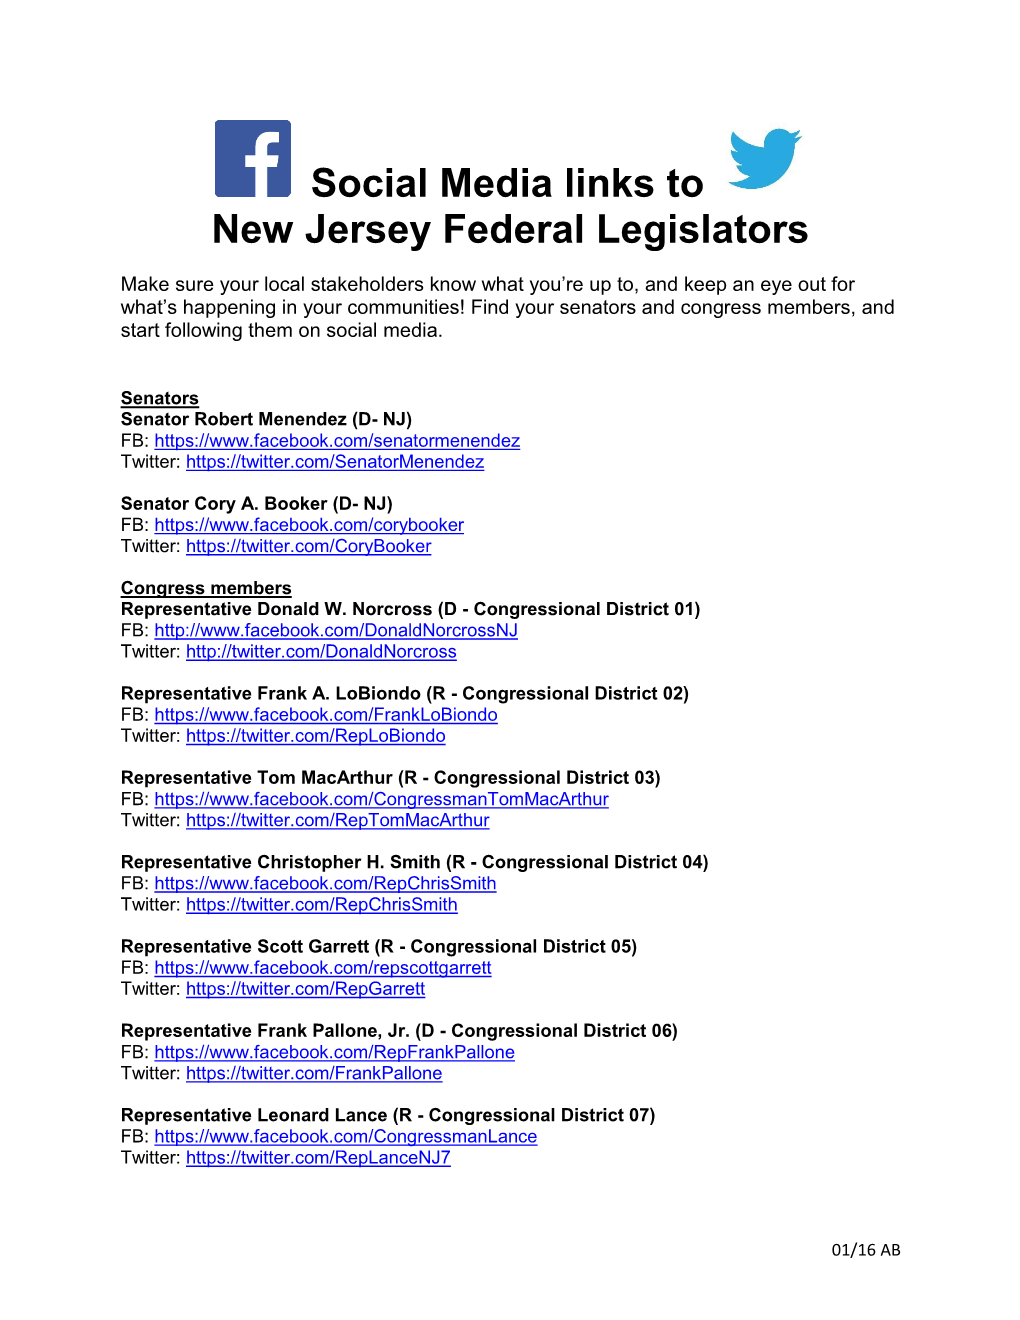 Social Media Links to New Jersey Federal Legislators